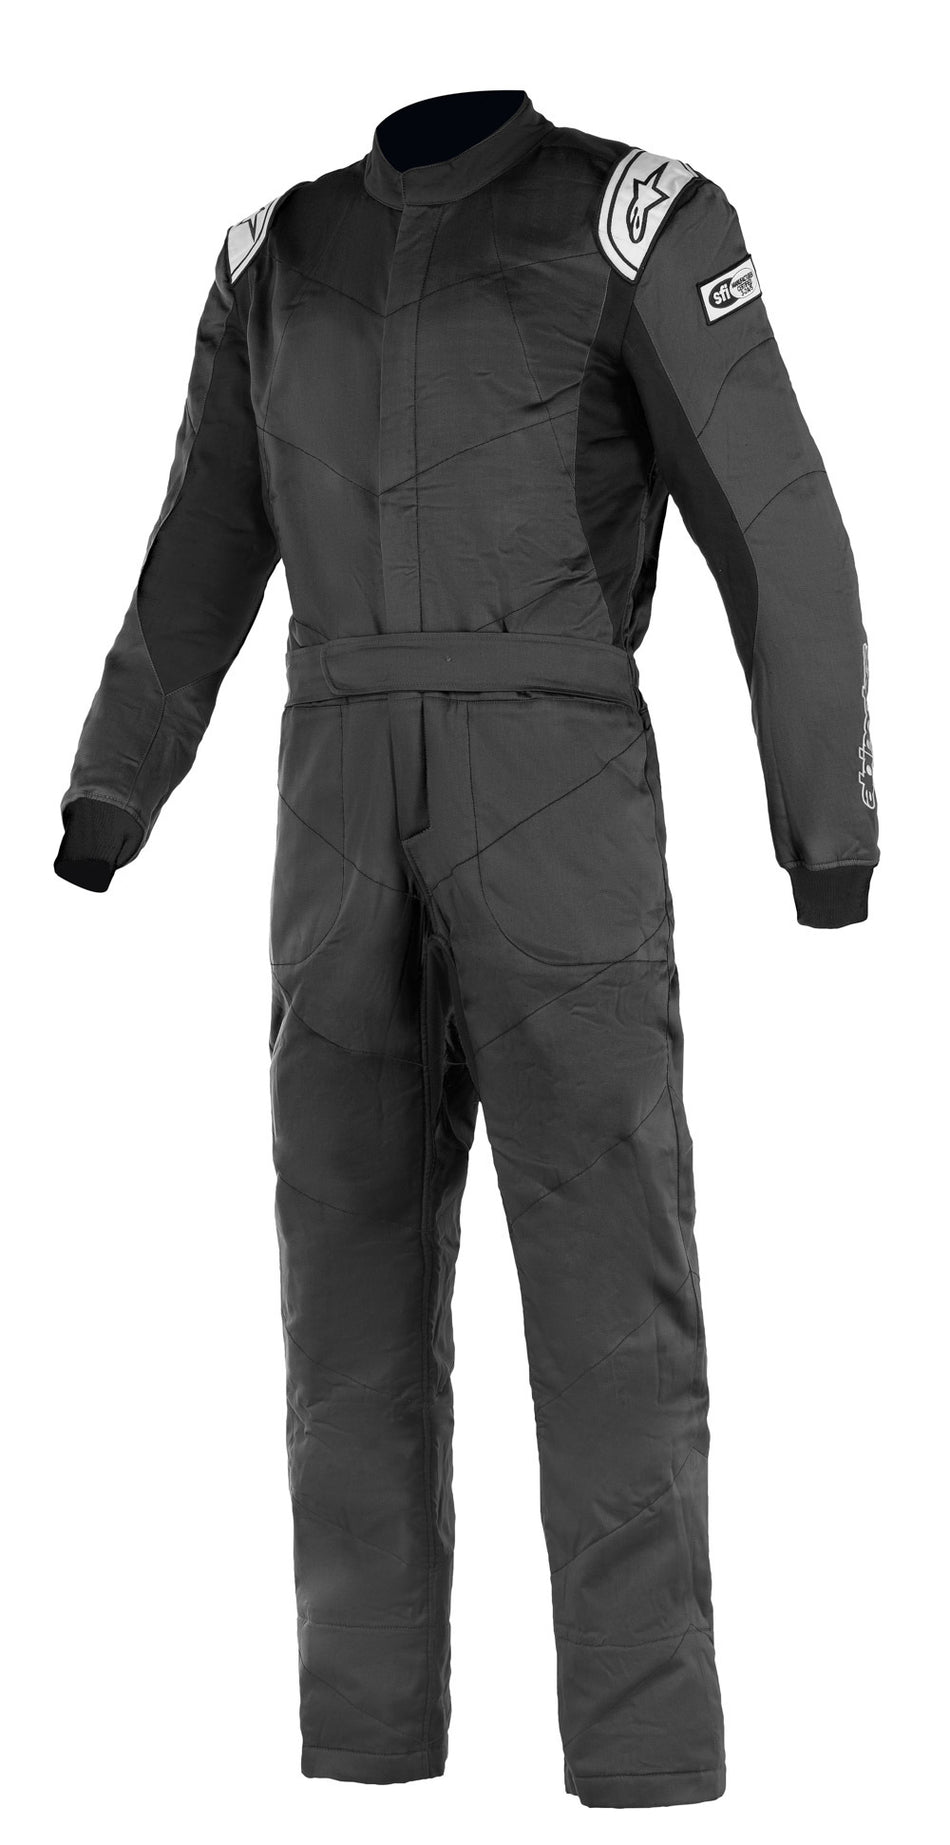 Driving Suit - Knoxville V2 - 1-Piece - SFI 3.2A/5 - Boot-Cut - Triple Layer - Fire Retardant Fabric - Black - Size 52 - Medium - Each